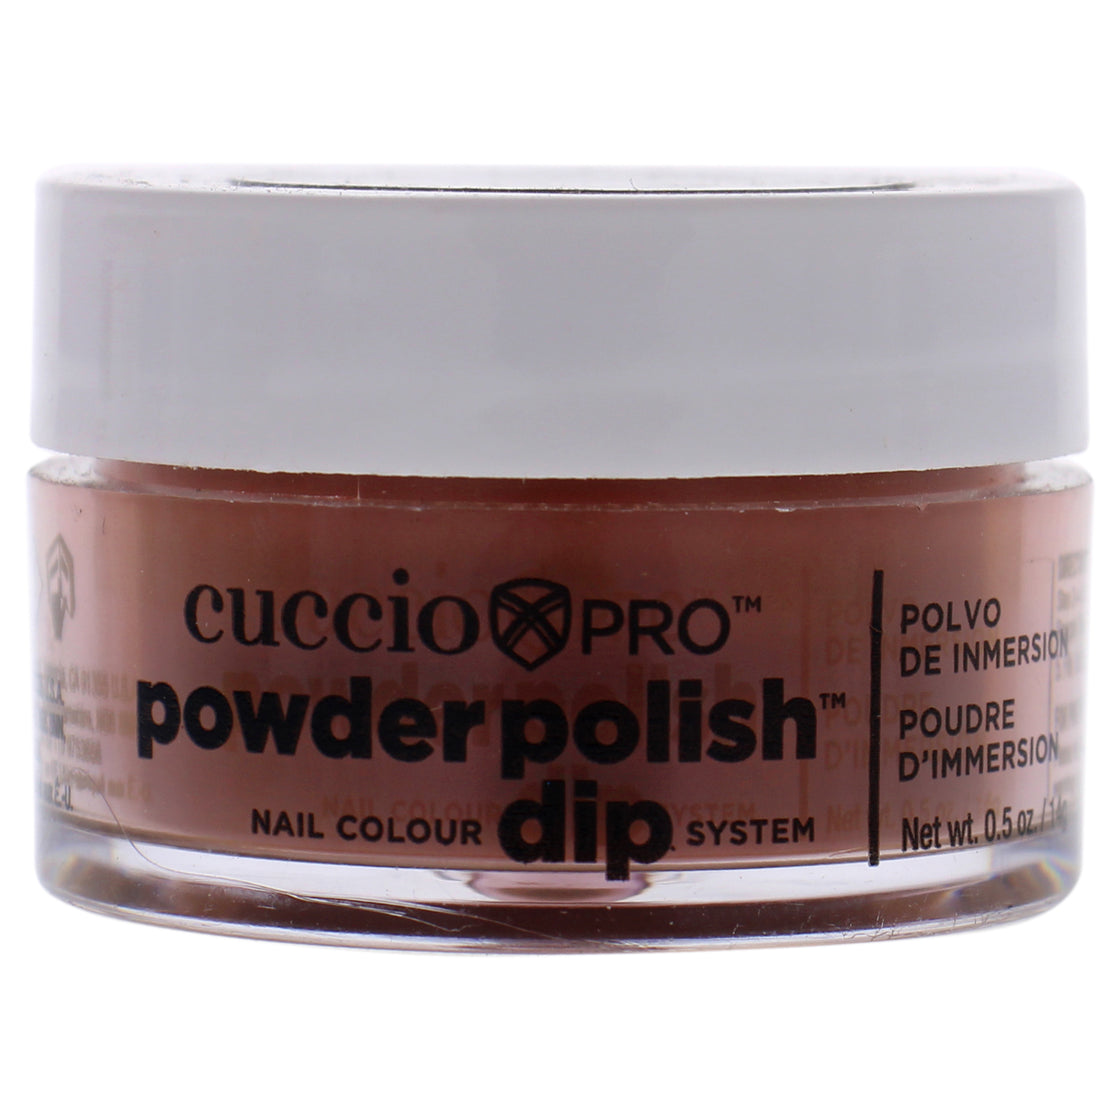 Pro Powder Polish Nail Colour Dip System - Brick Orange by Cuccio Colour for Women - 0.5 oz Nail Powder